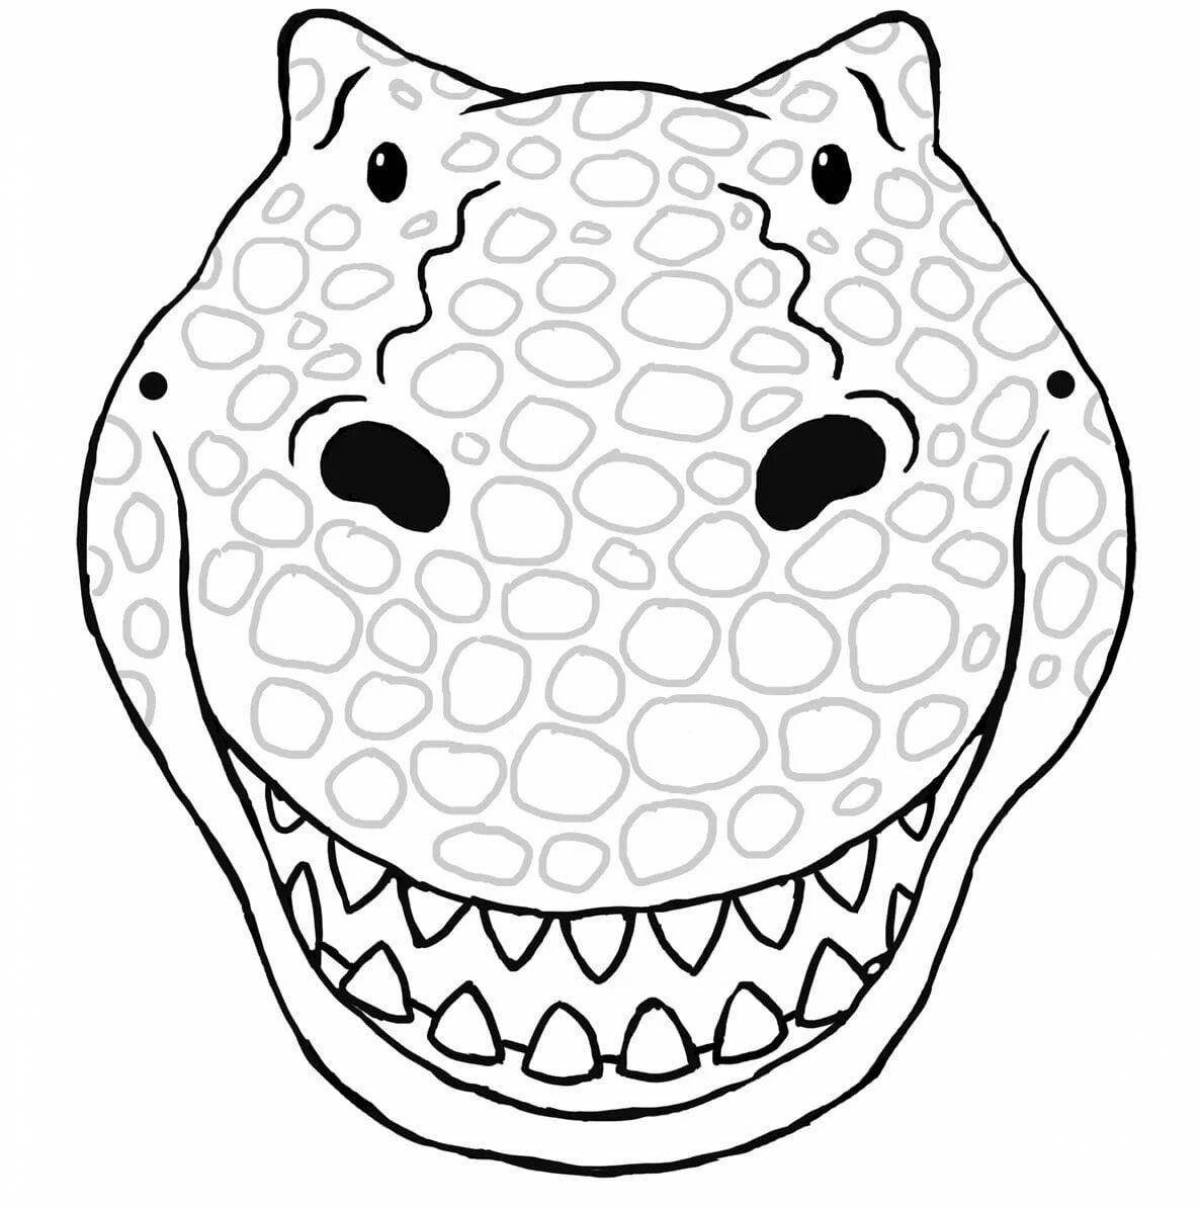 Coloring page beckoning lizard mask